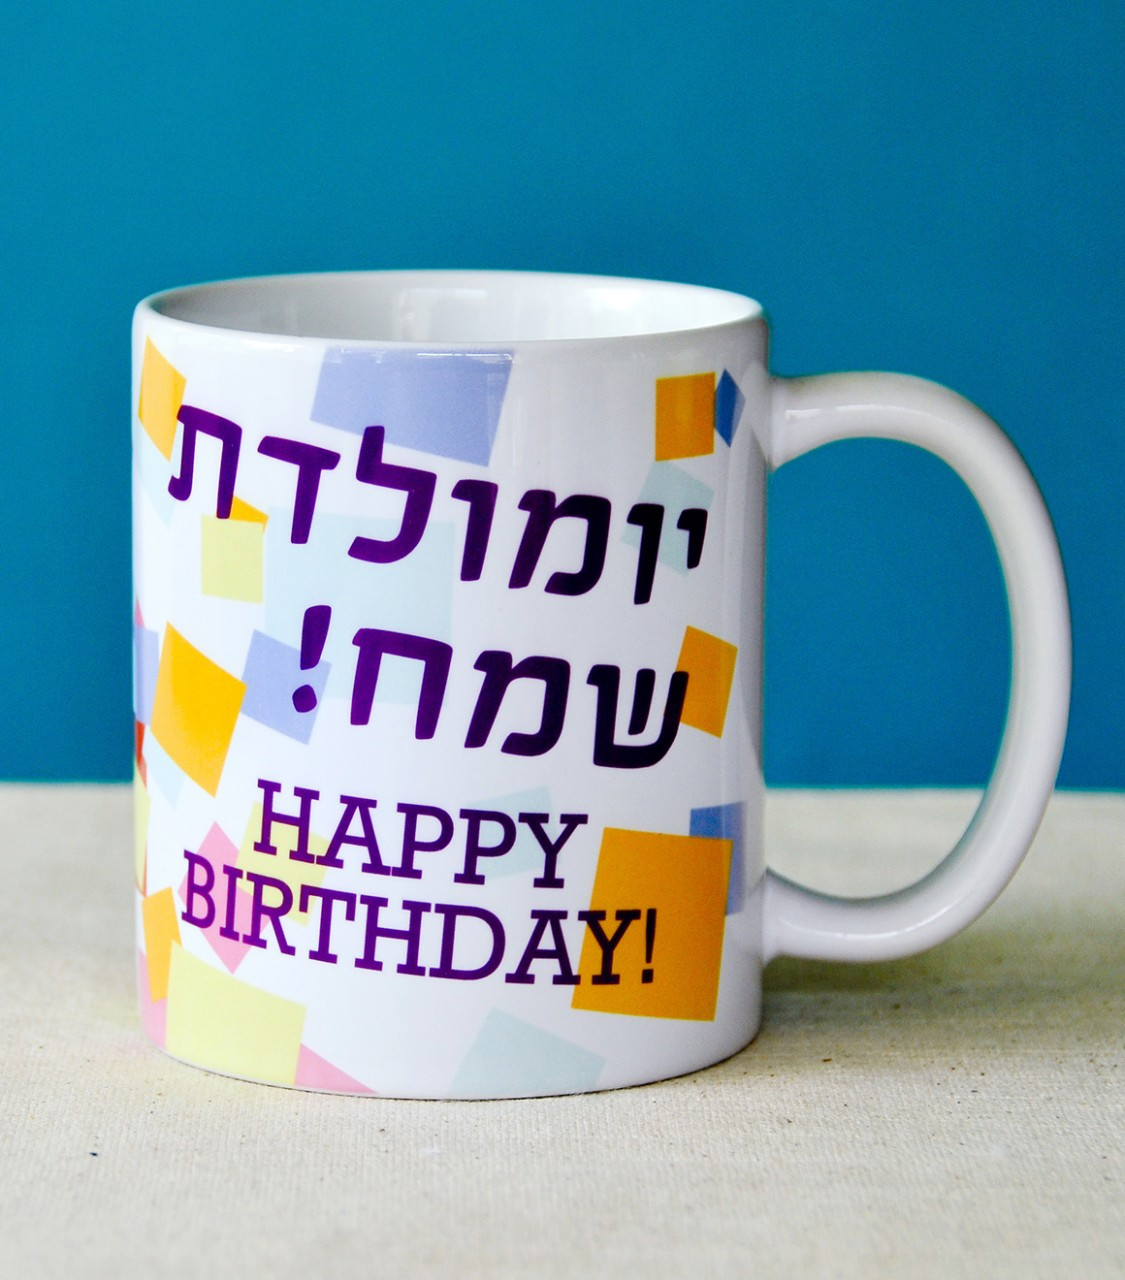 Hanukkah Joy Vey Coffee Mug